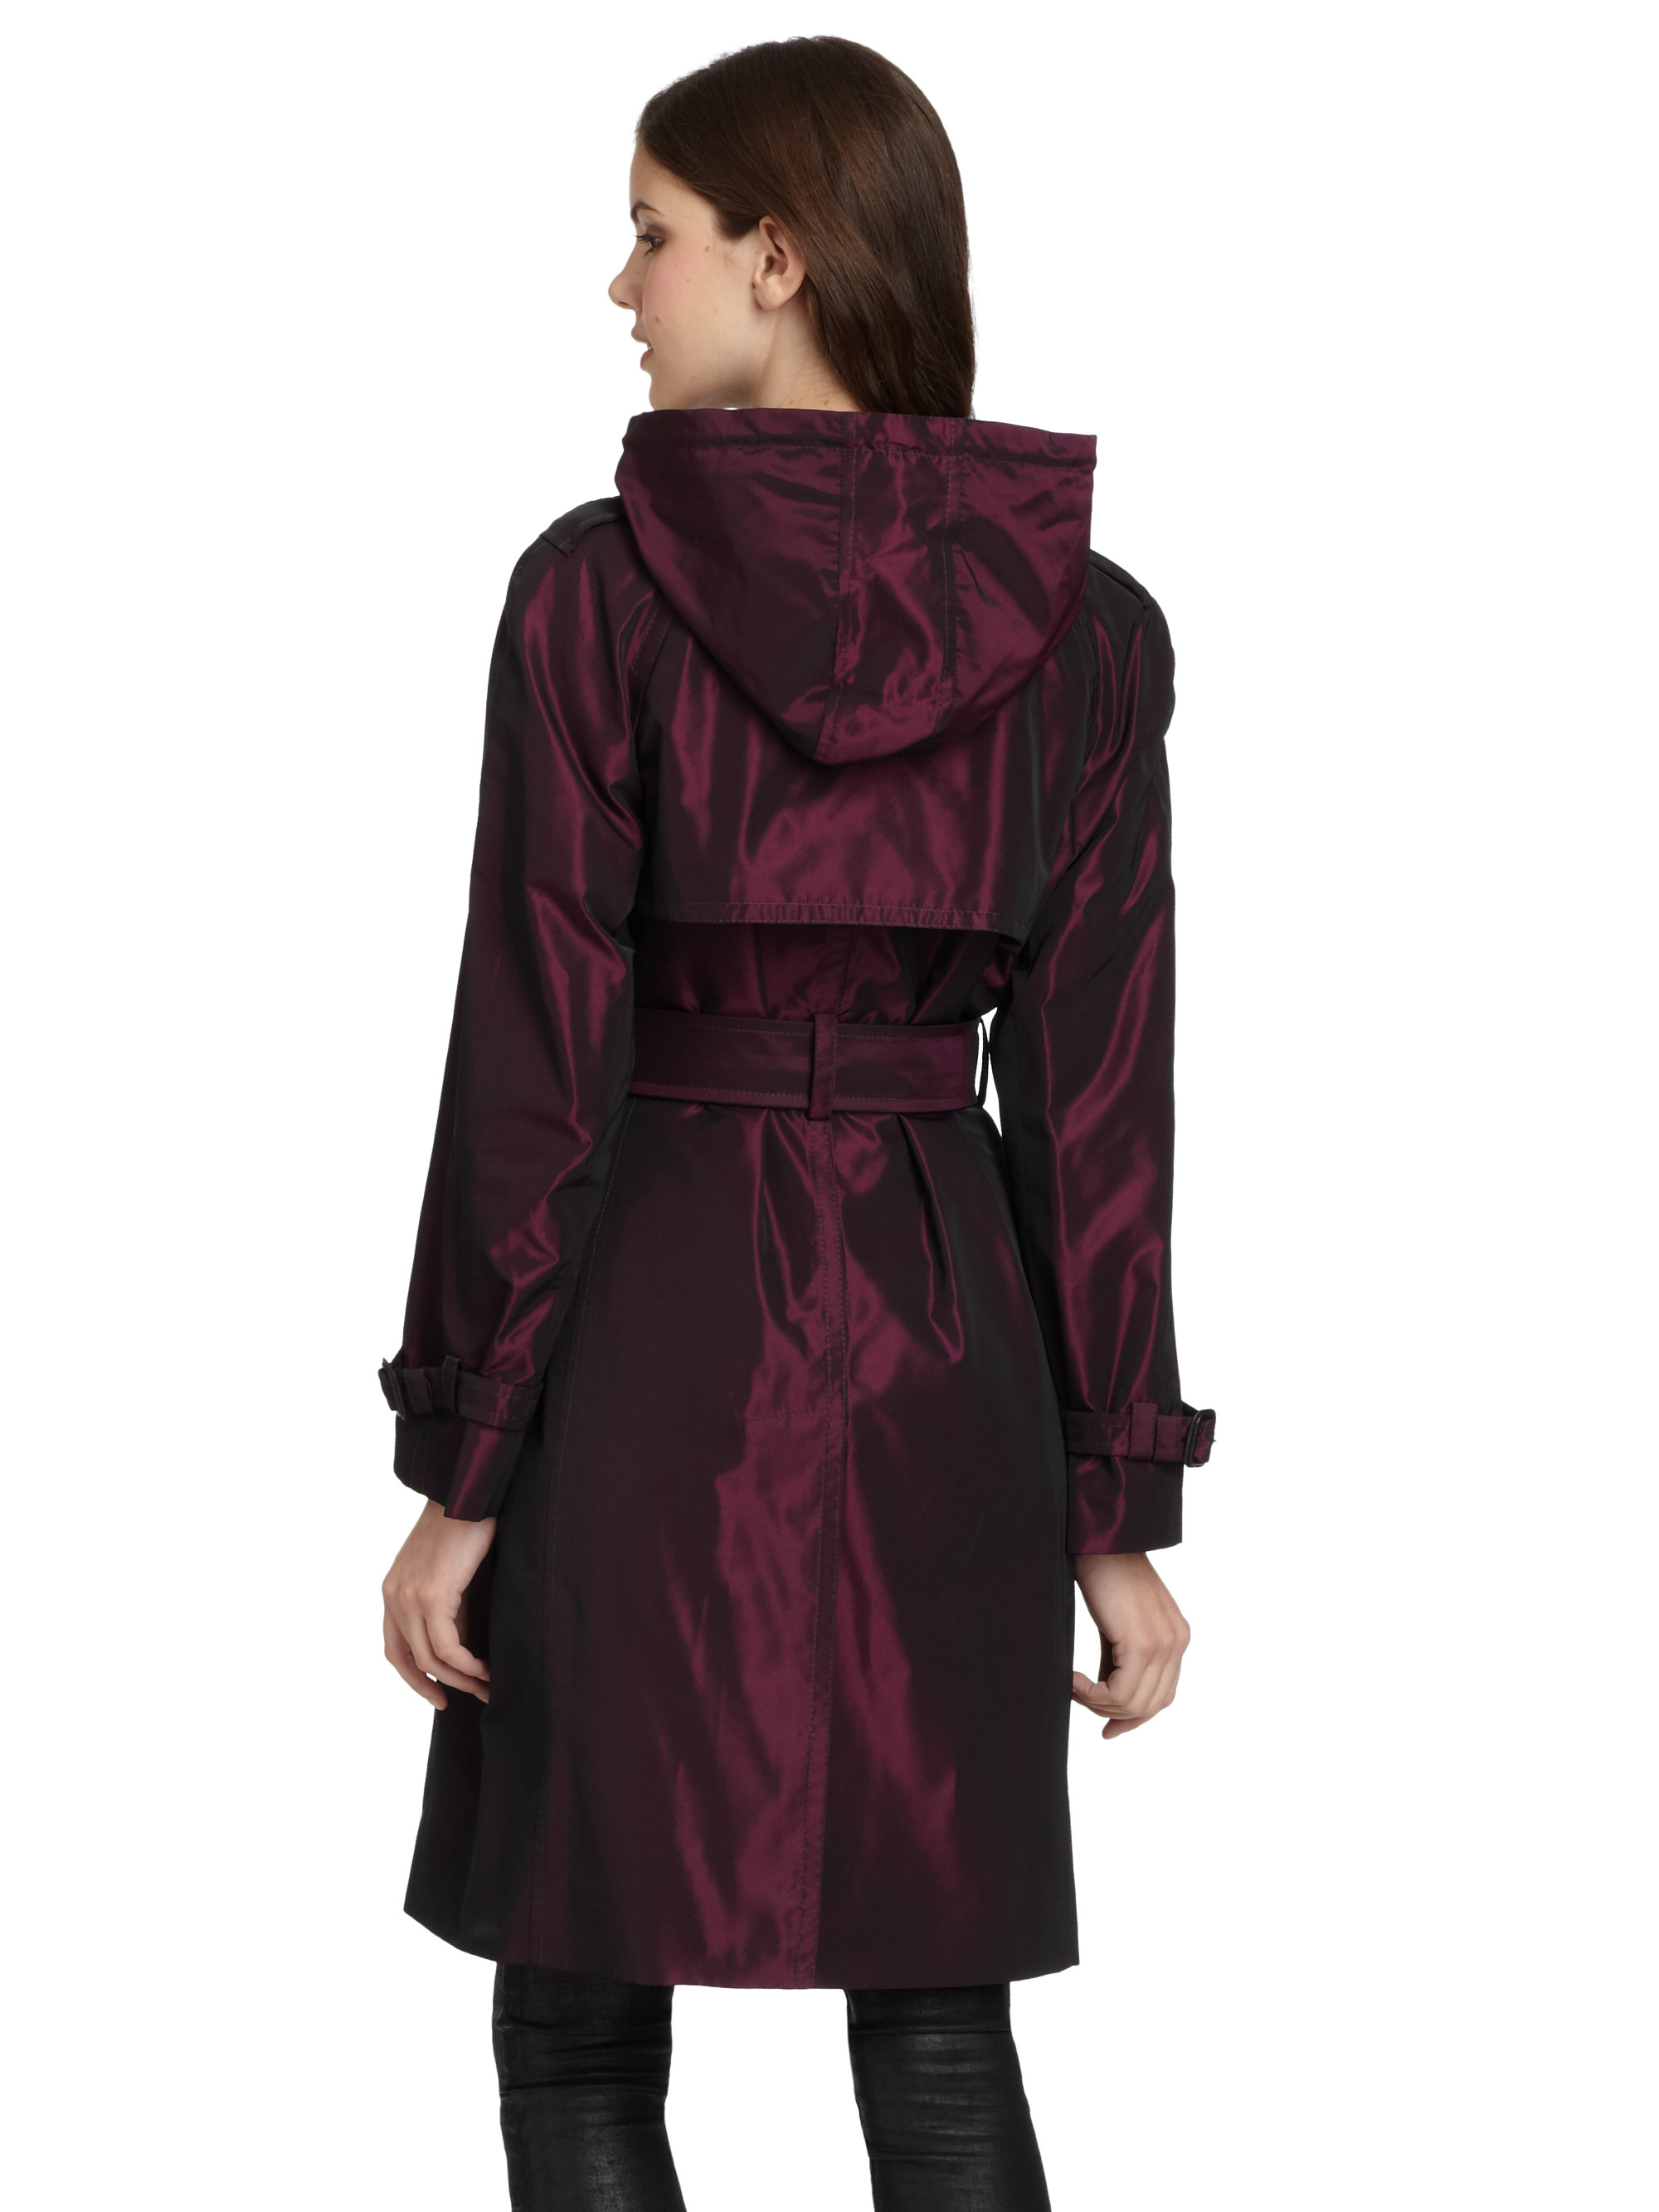 Dolce & Gabbana Iridescent Trench Coat in Purple - Lyst